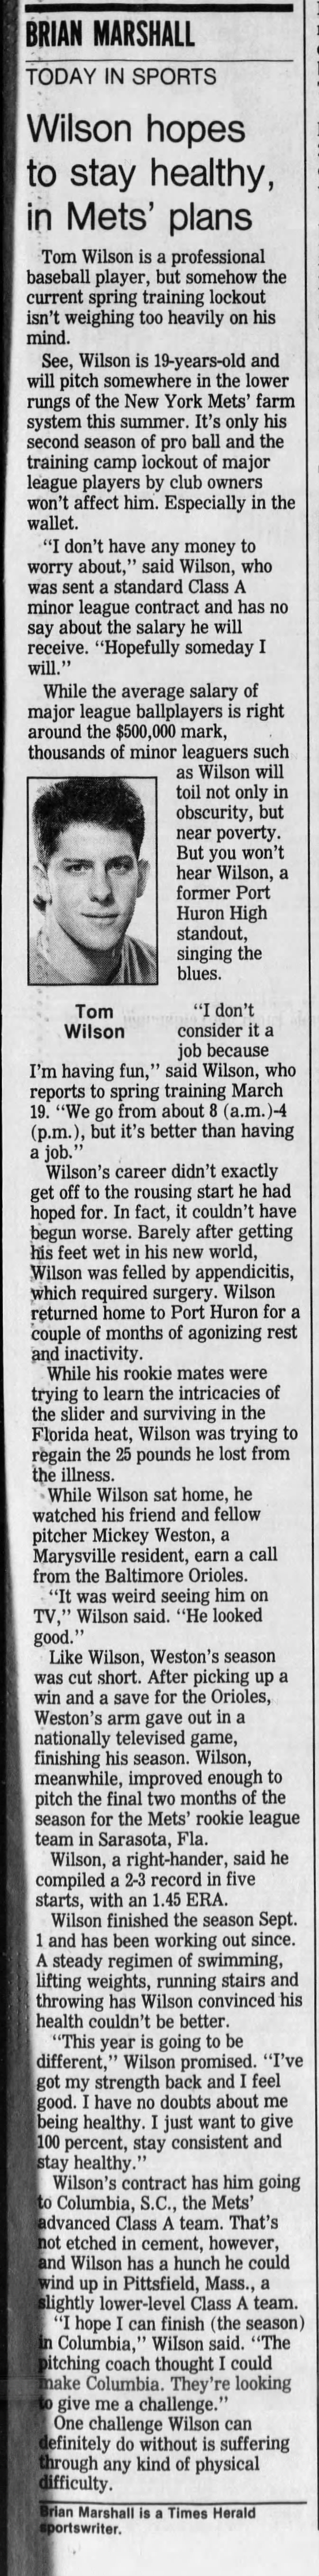 Tom Wilson - Feb. 16, 1990